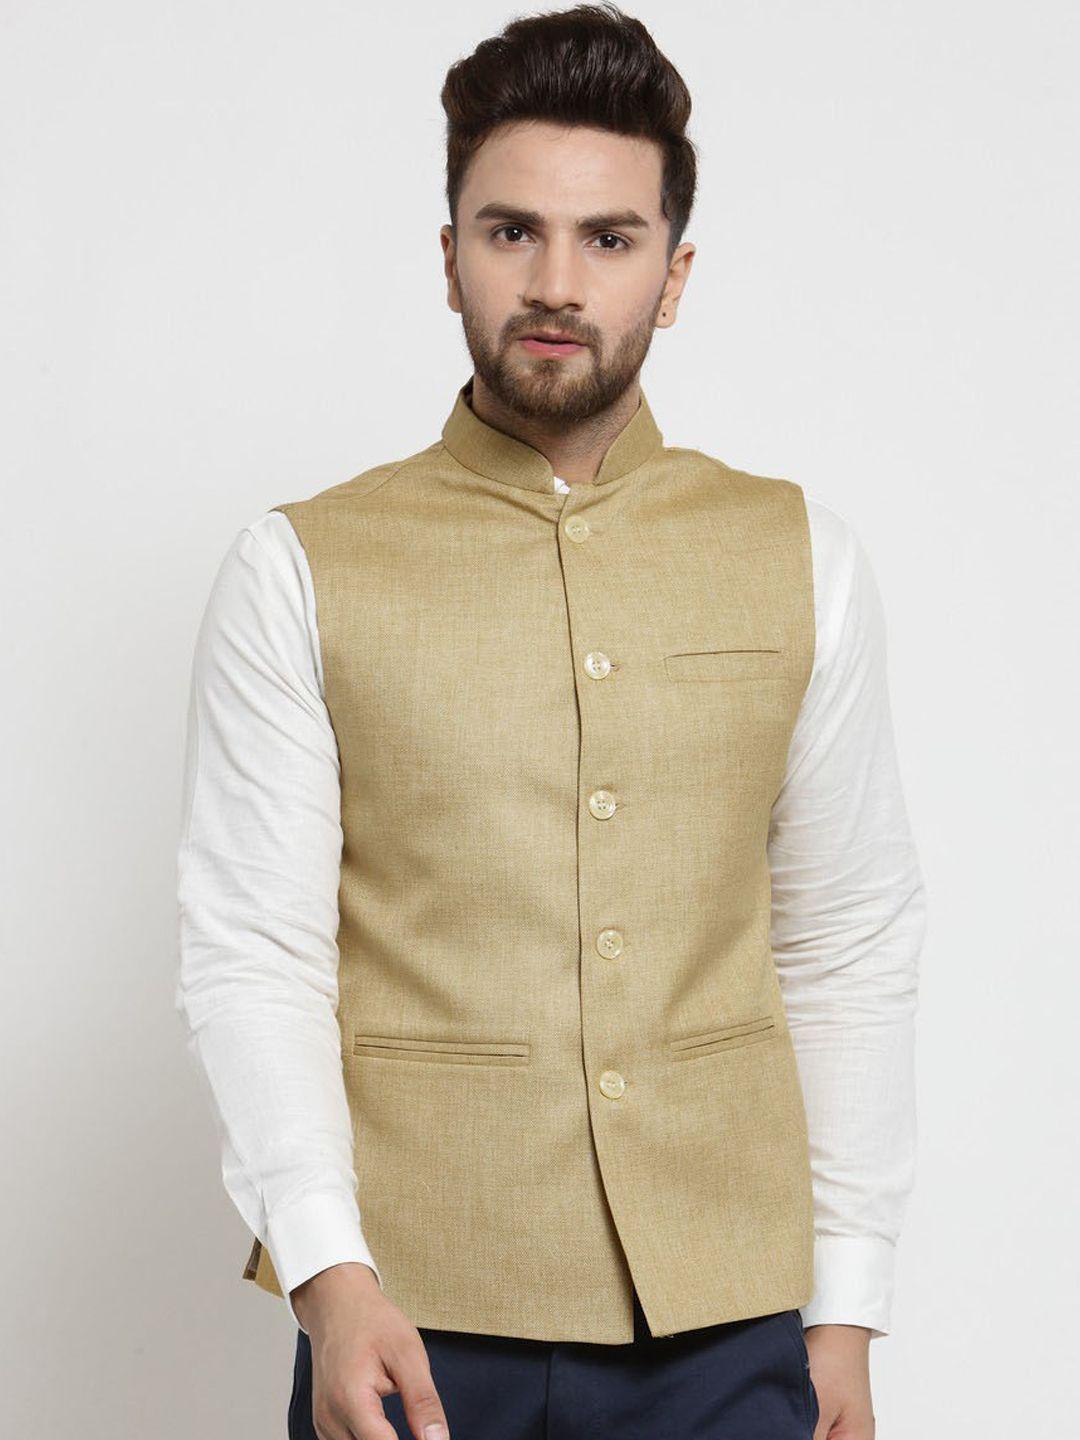 treemoda-men-beige-solid-jute-cotton-nehru-jacket